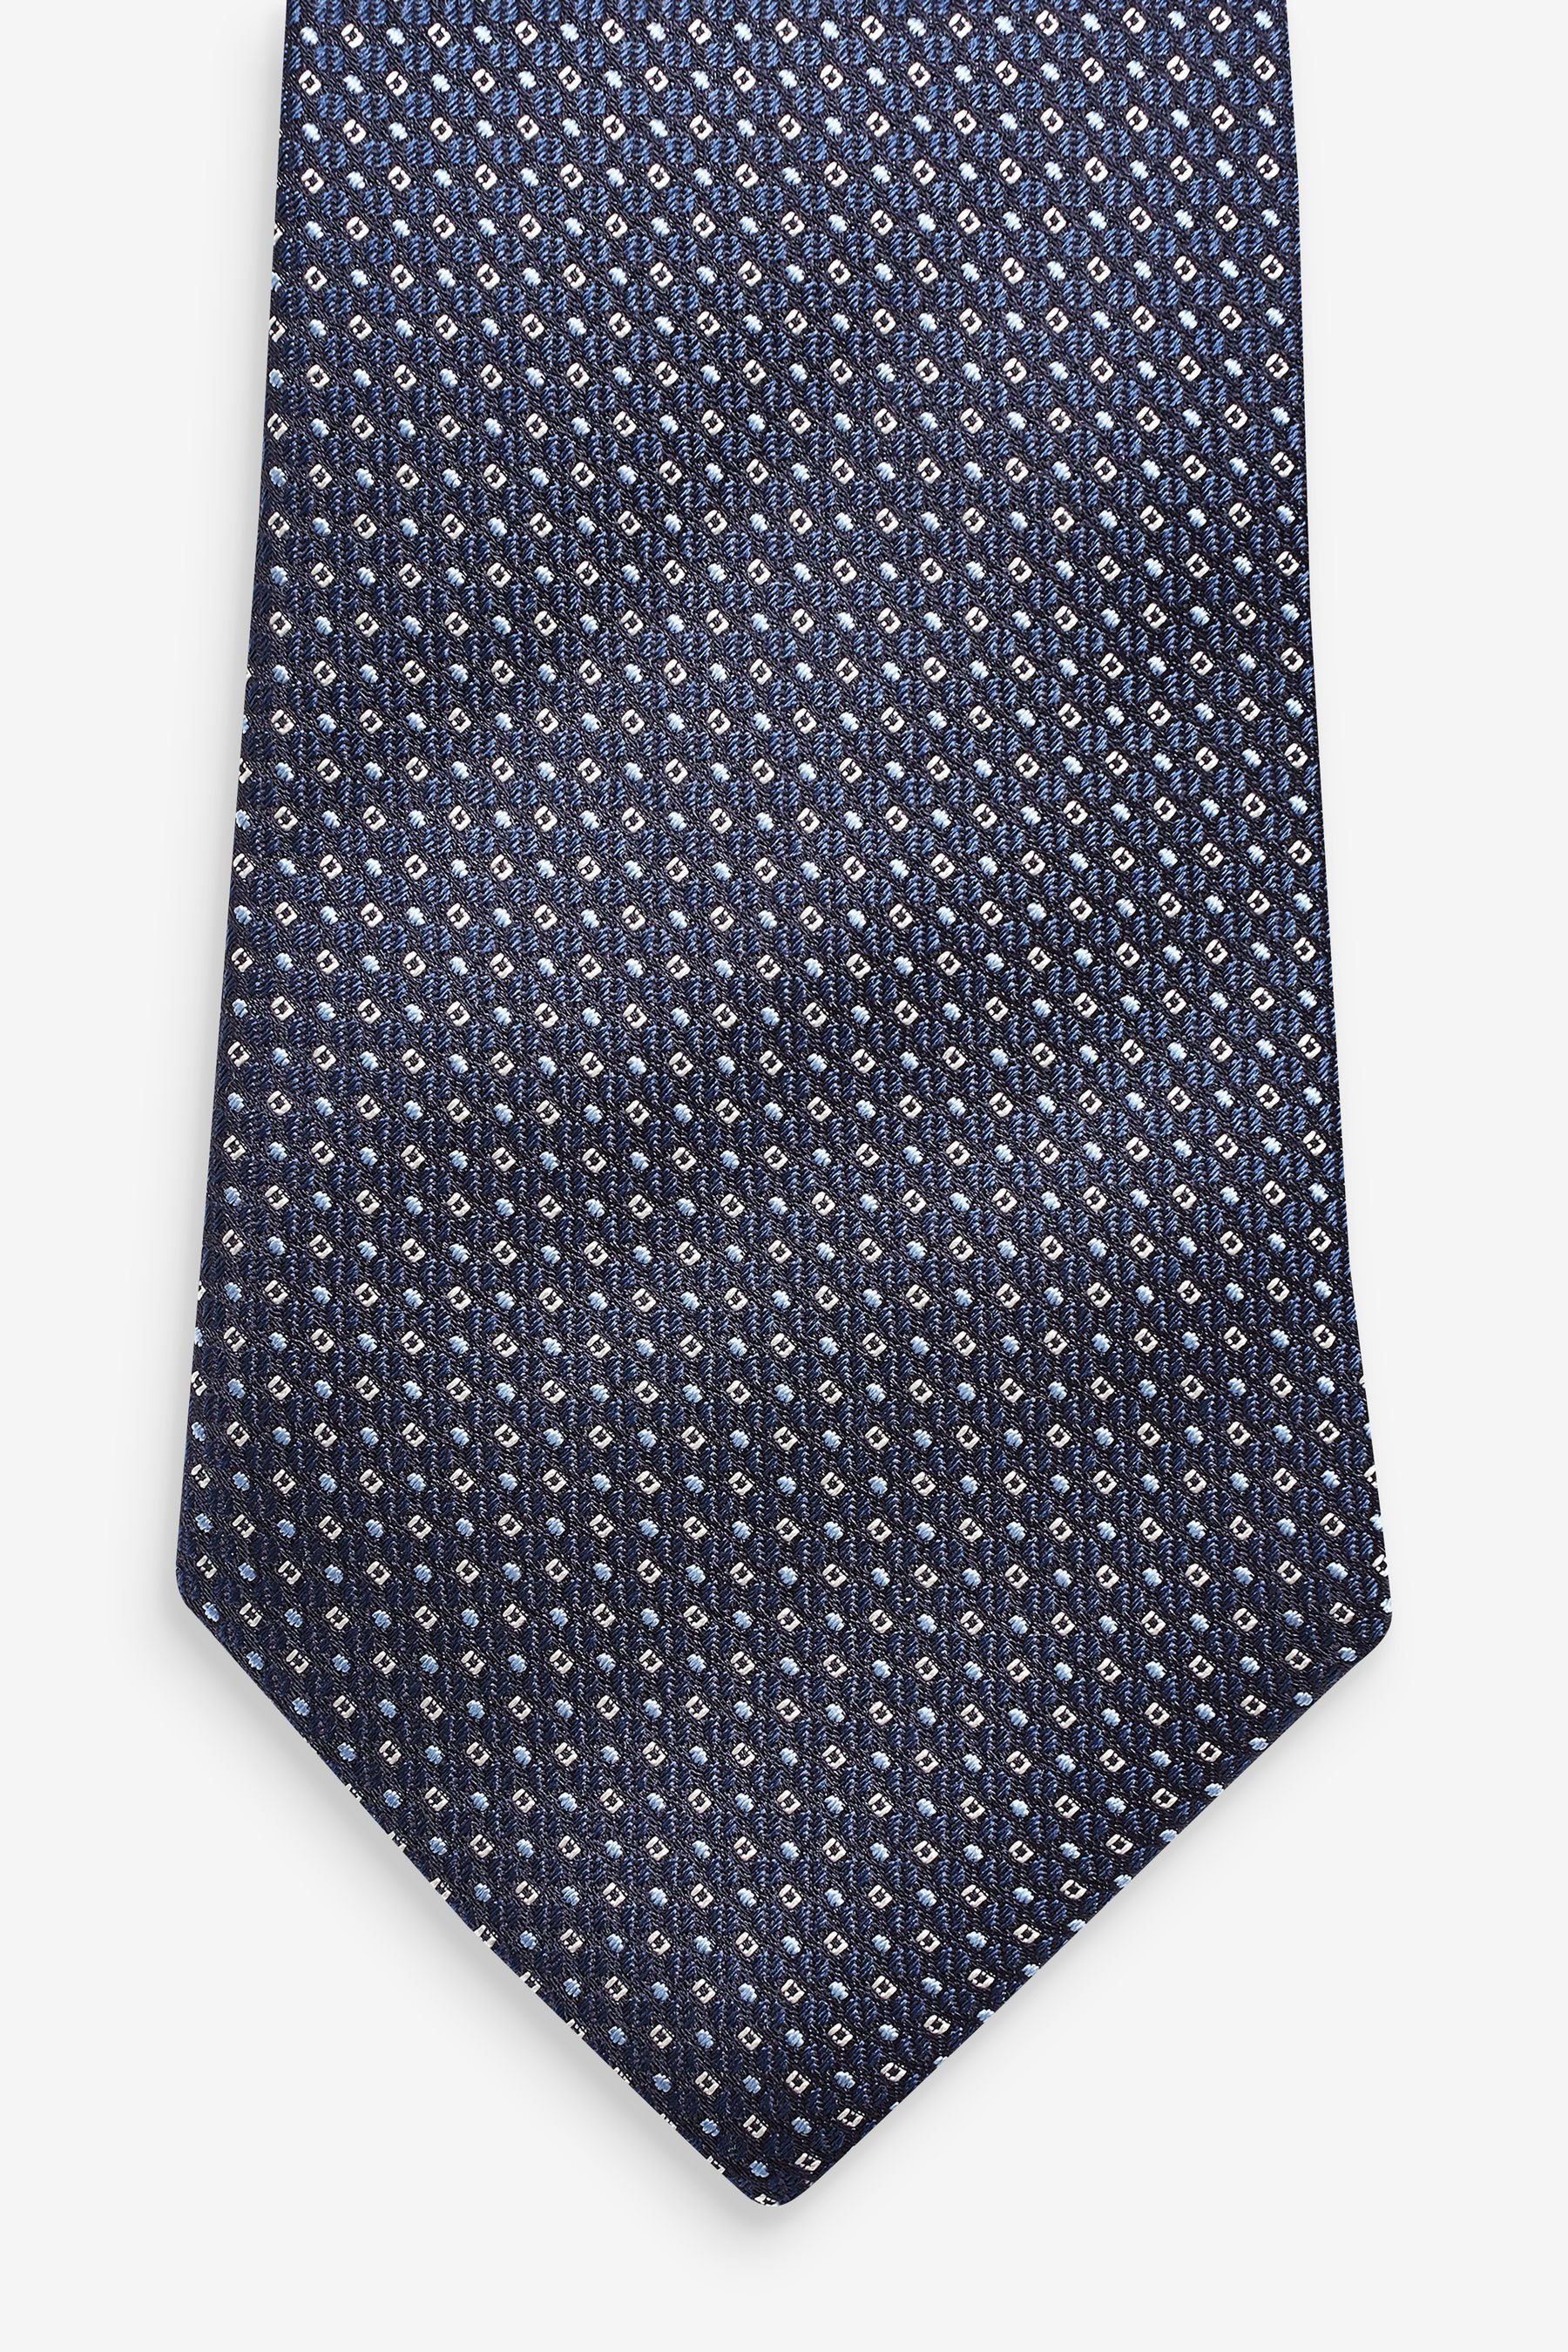 Next Krawatte Signature-Krawatte "Made in Navy Blue Italy" Pattern (1-St)